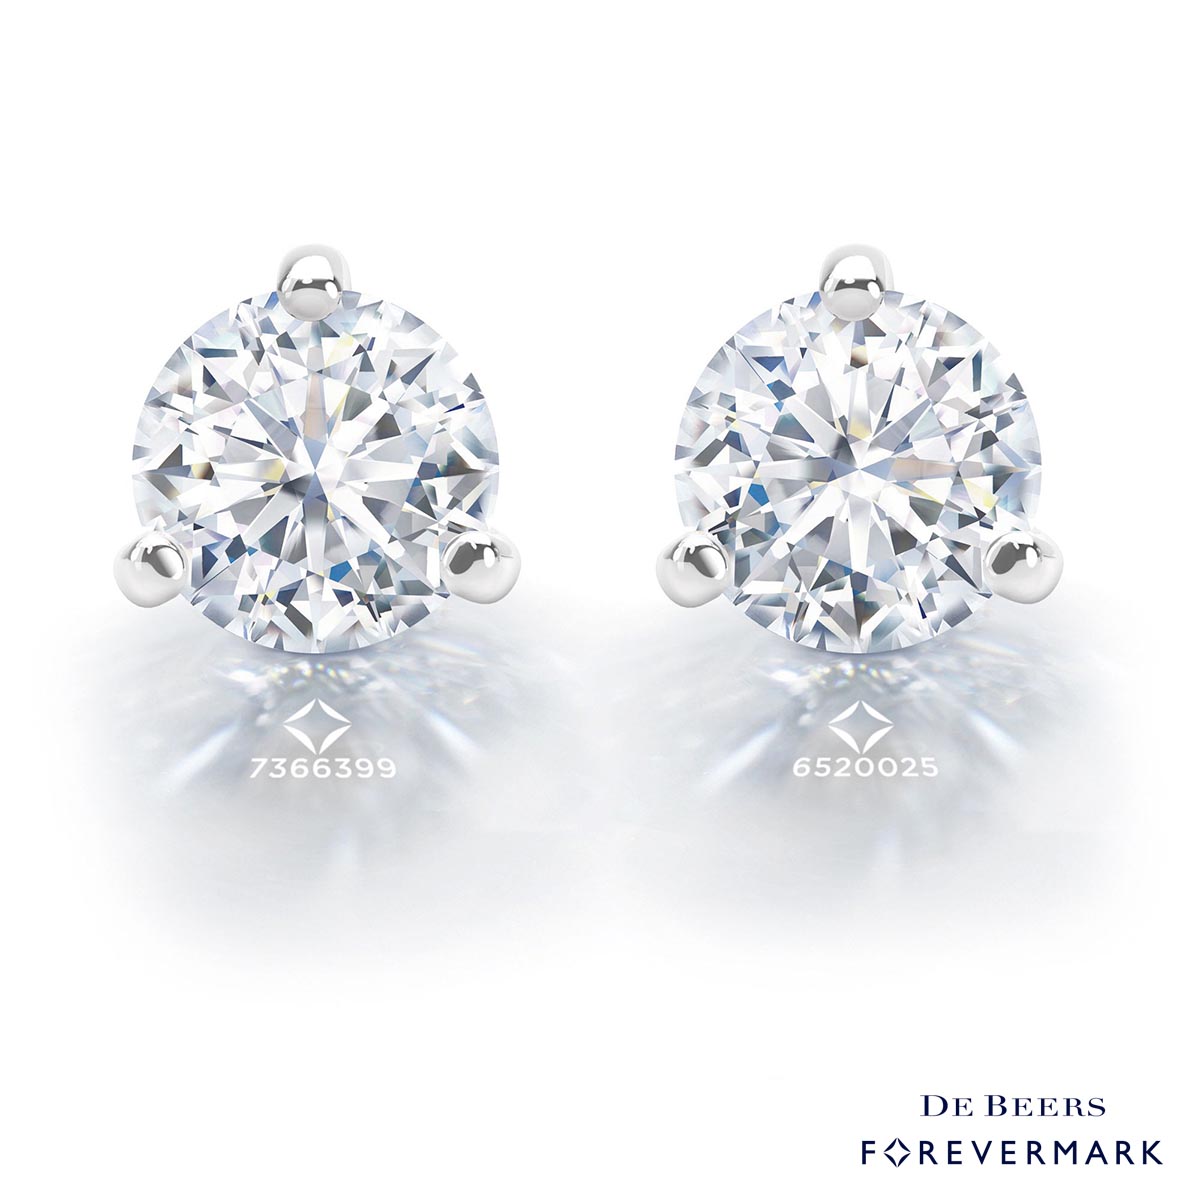 De Beers Forevermark Diamond Stud Earrings in 18kt White Gold (1/5ct tw)